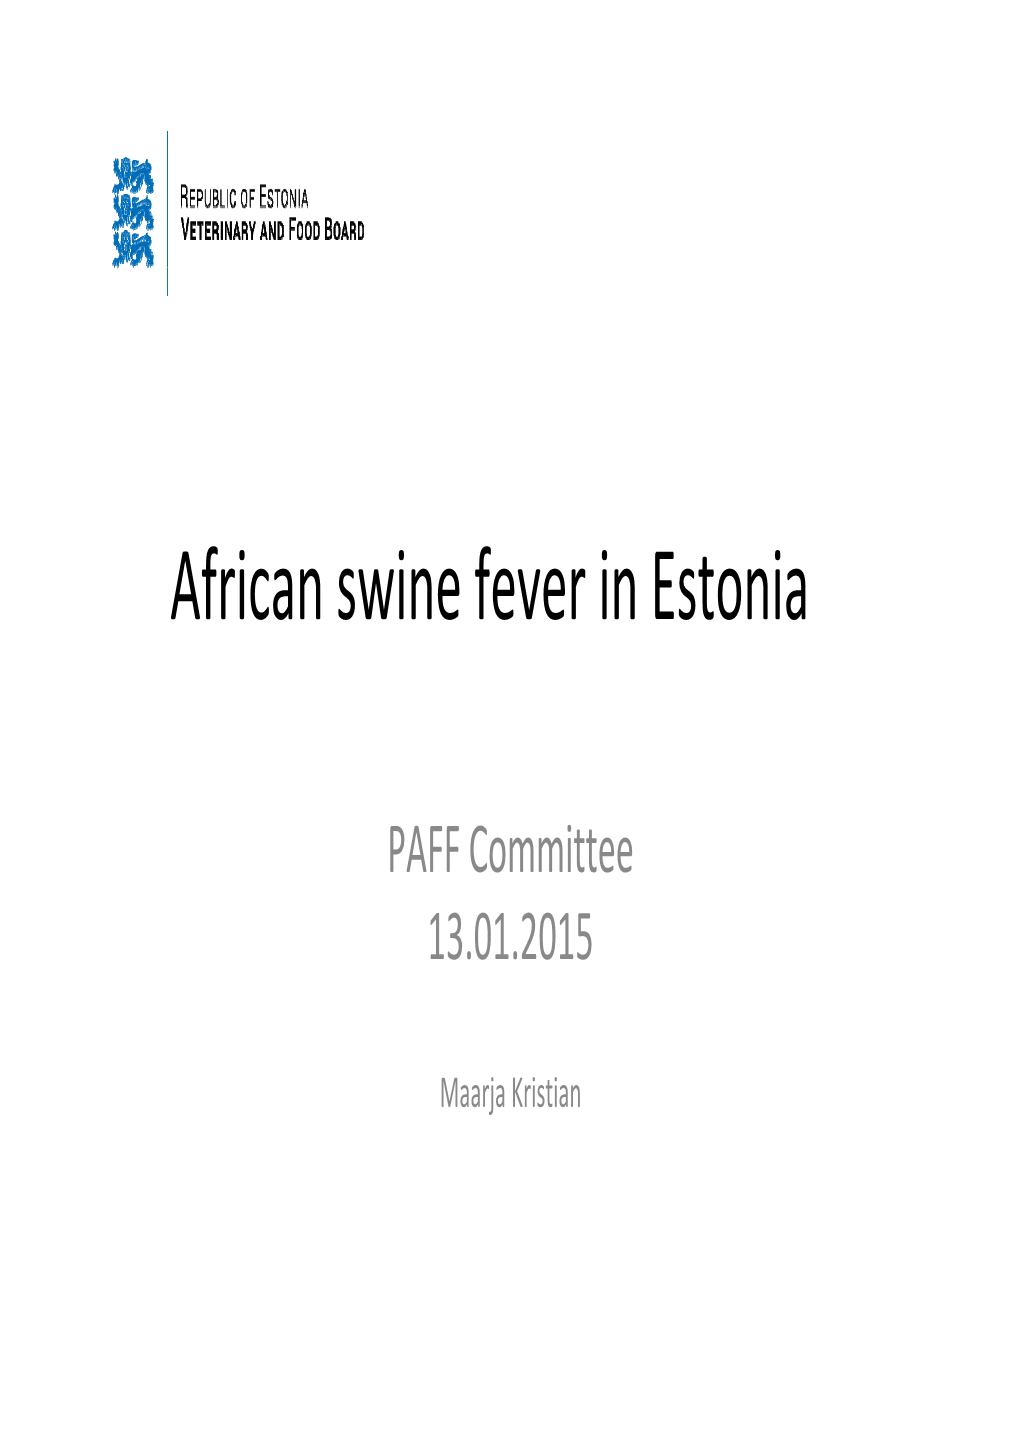 African Swine Fever in Estonia